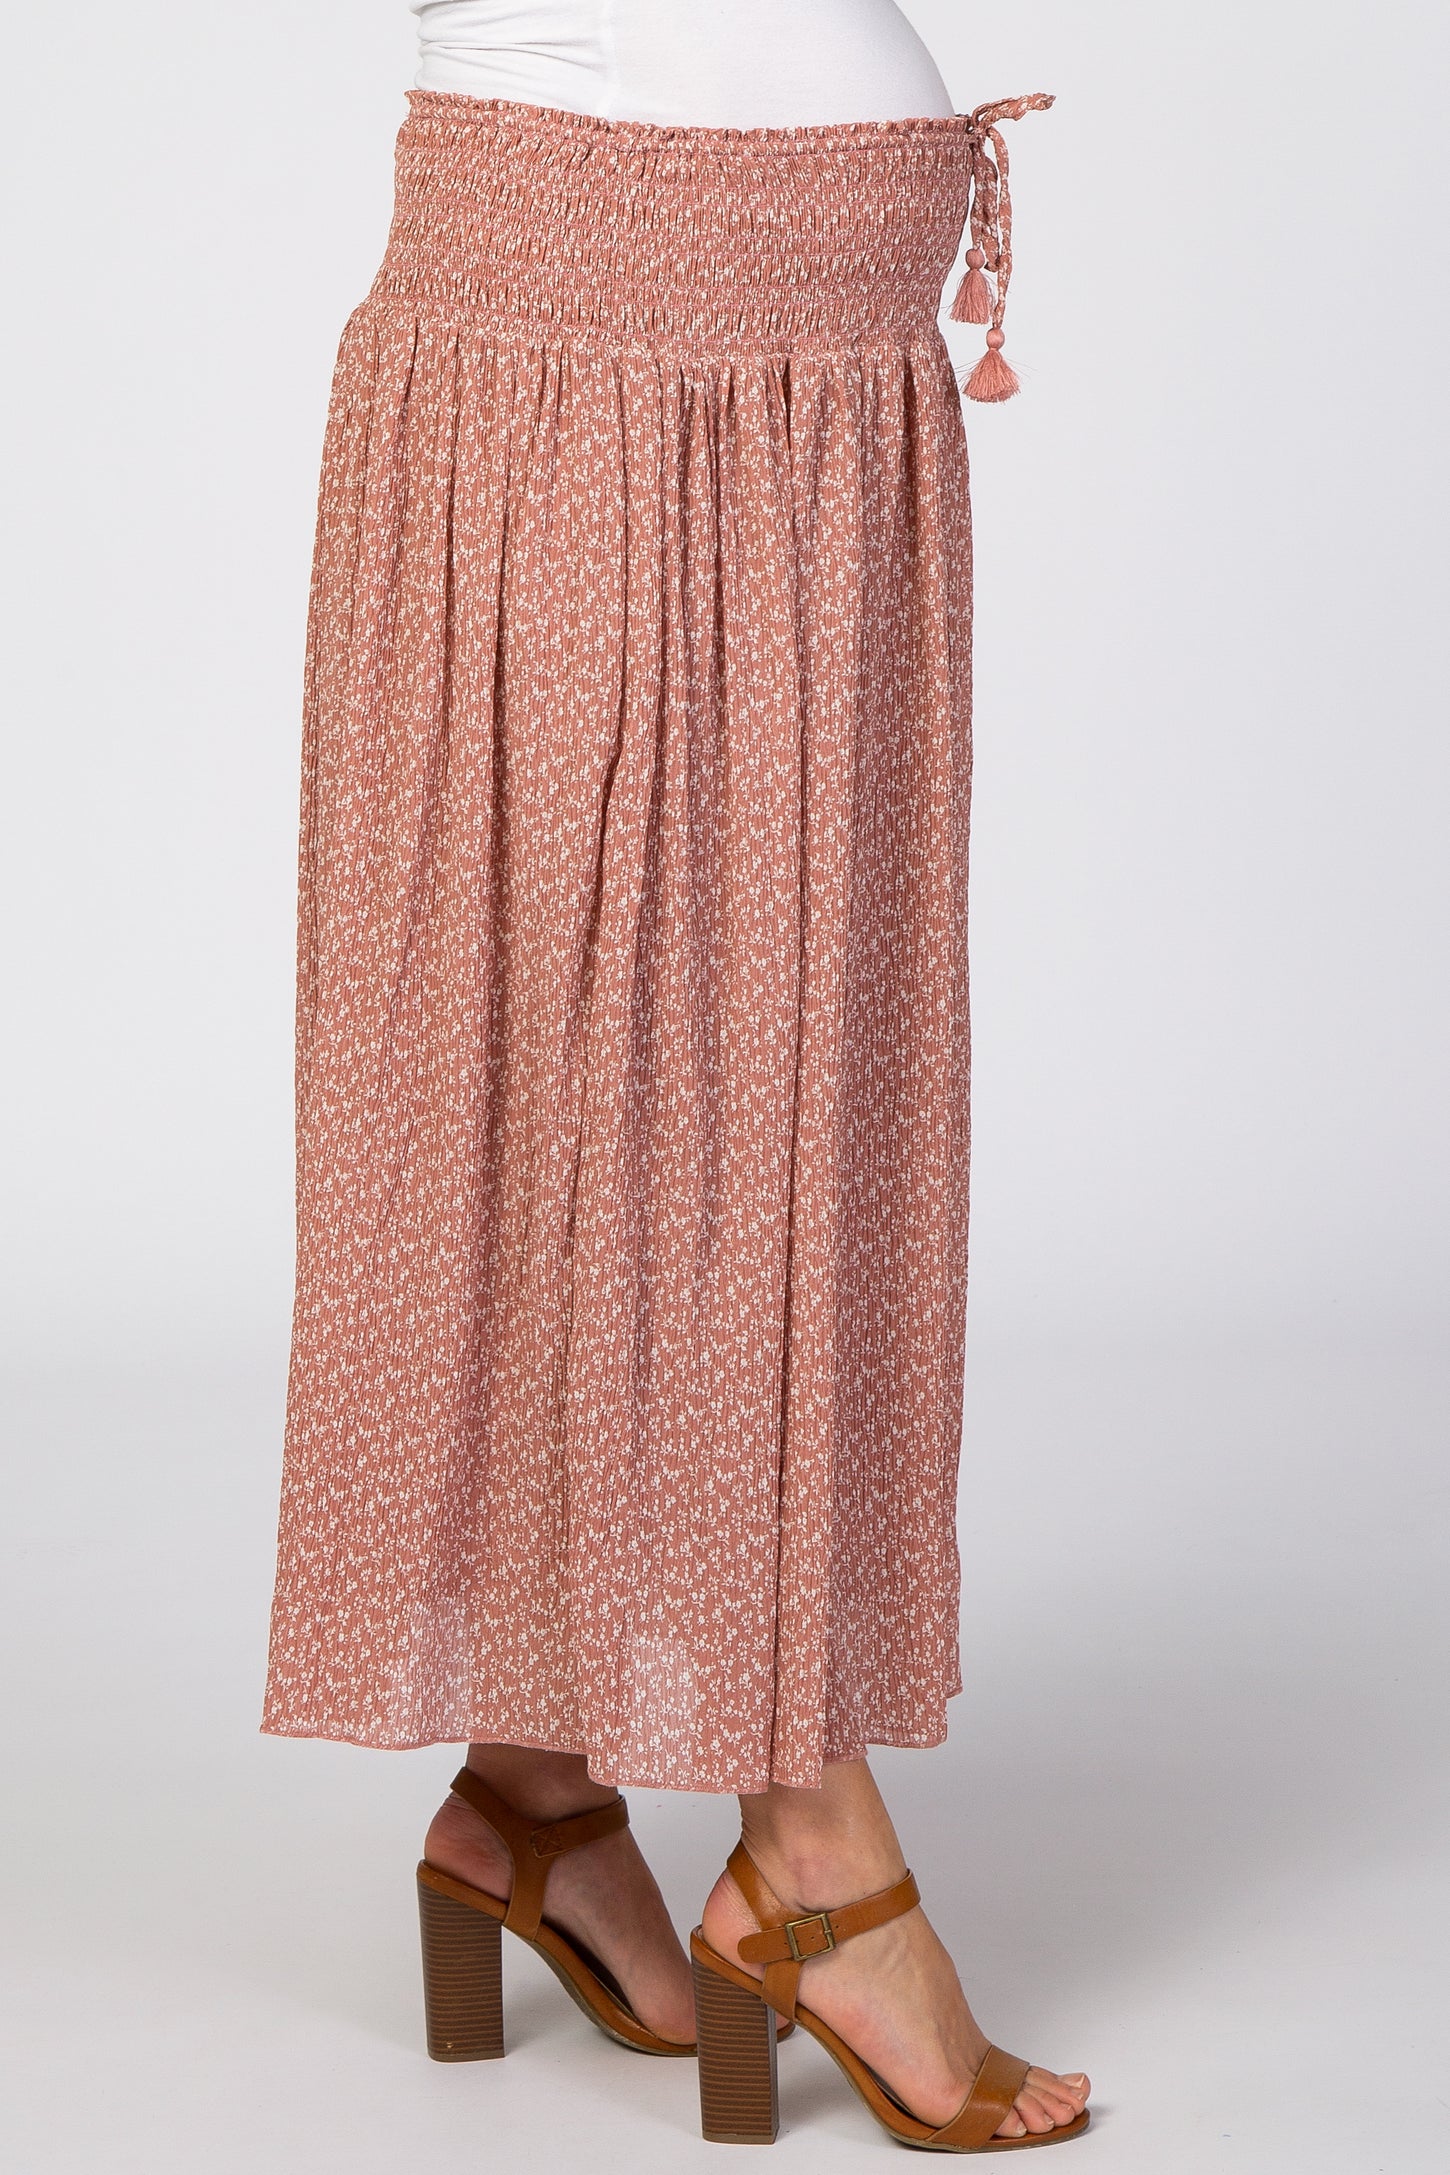 Mauve Floral Chiffon Smocked Elastic Waist Maternity Midi Skirt